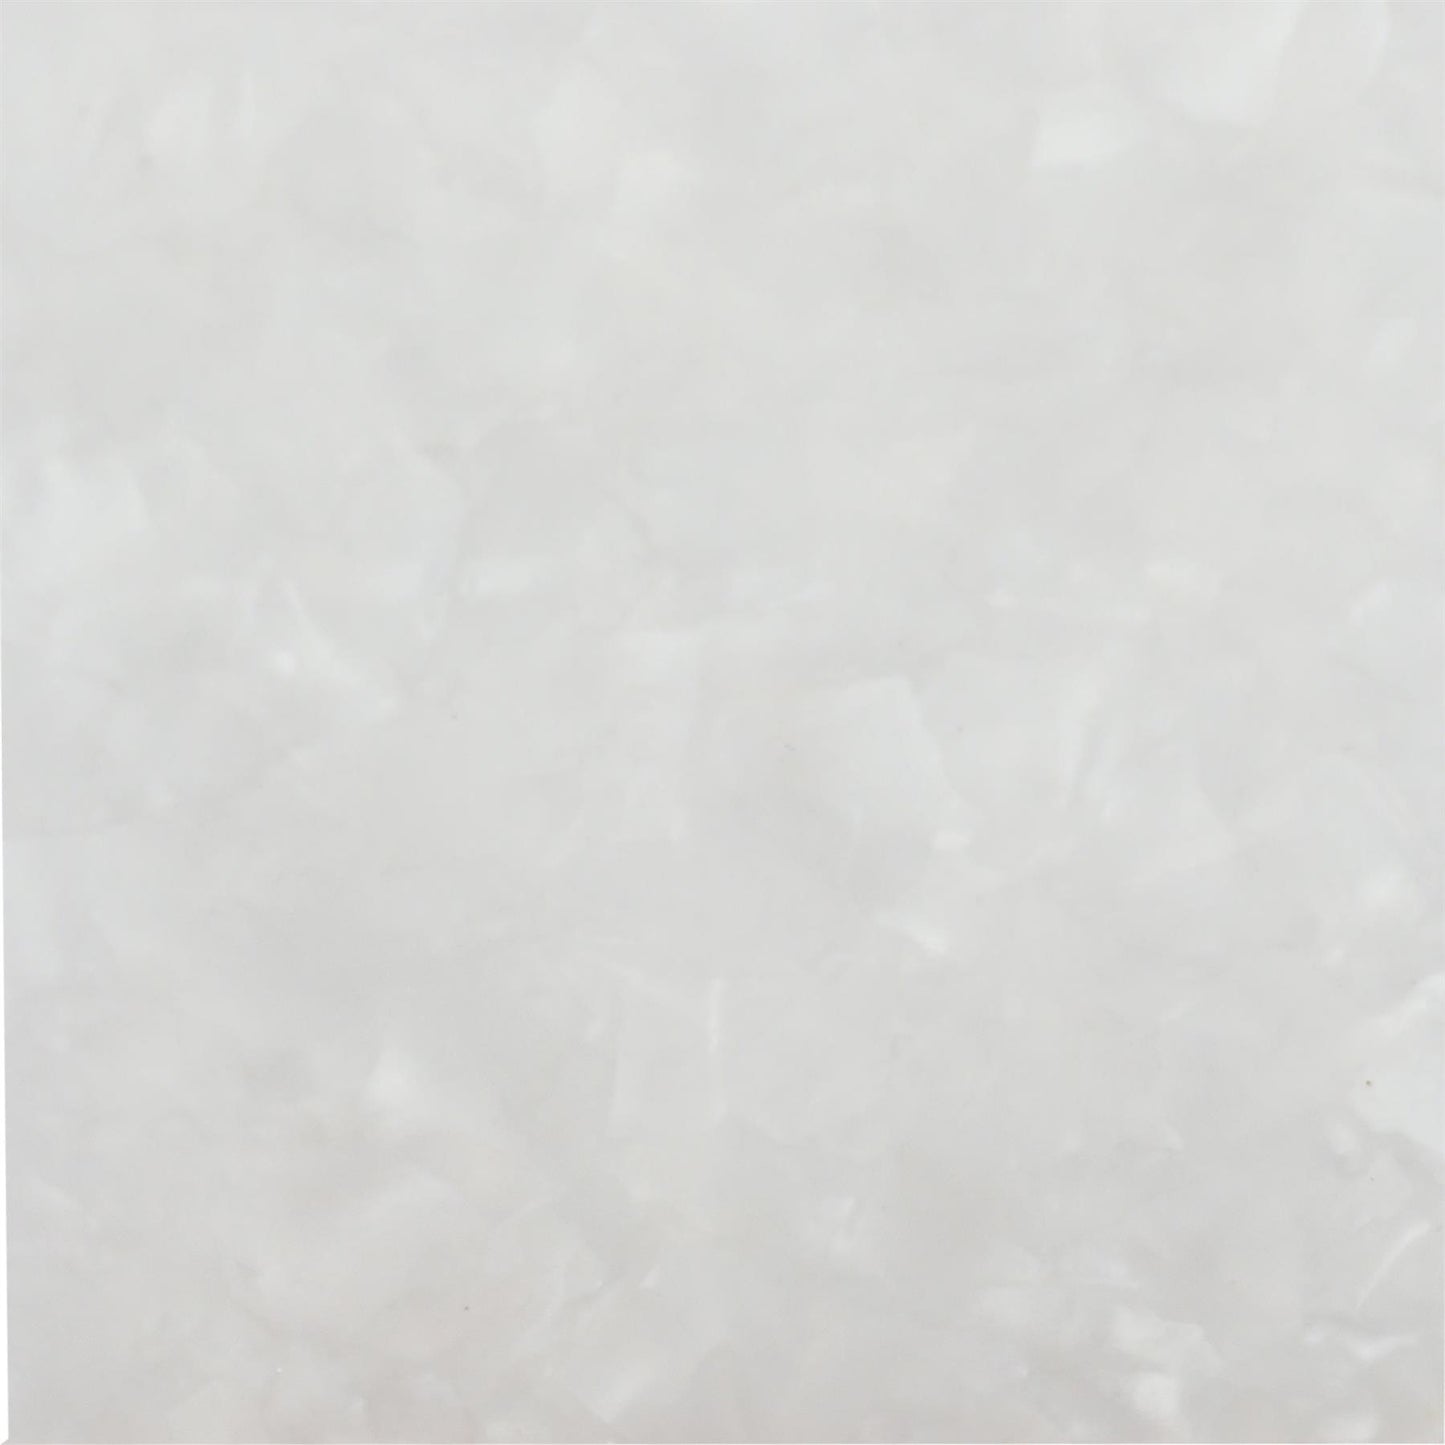 [Incudo] White Pearloid Acrylic Sheet - 600x400x3mm